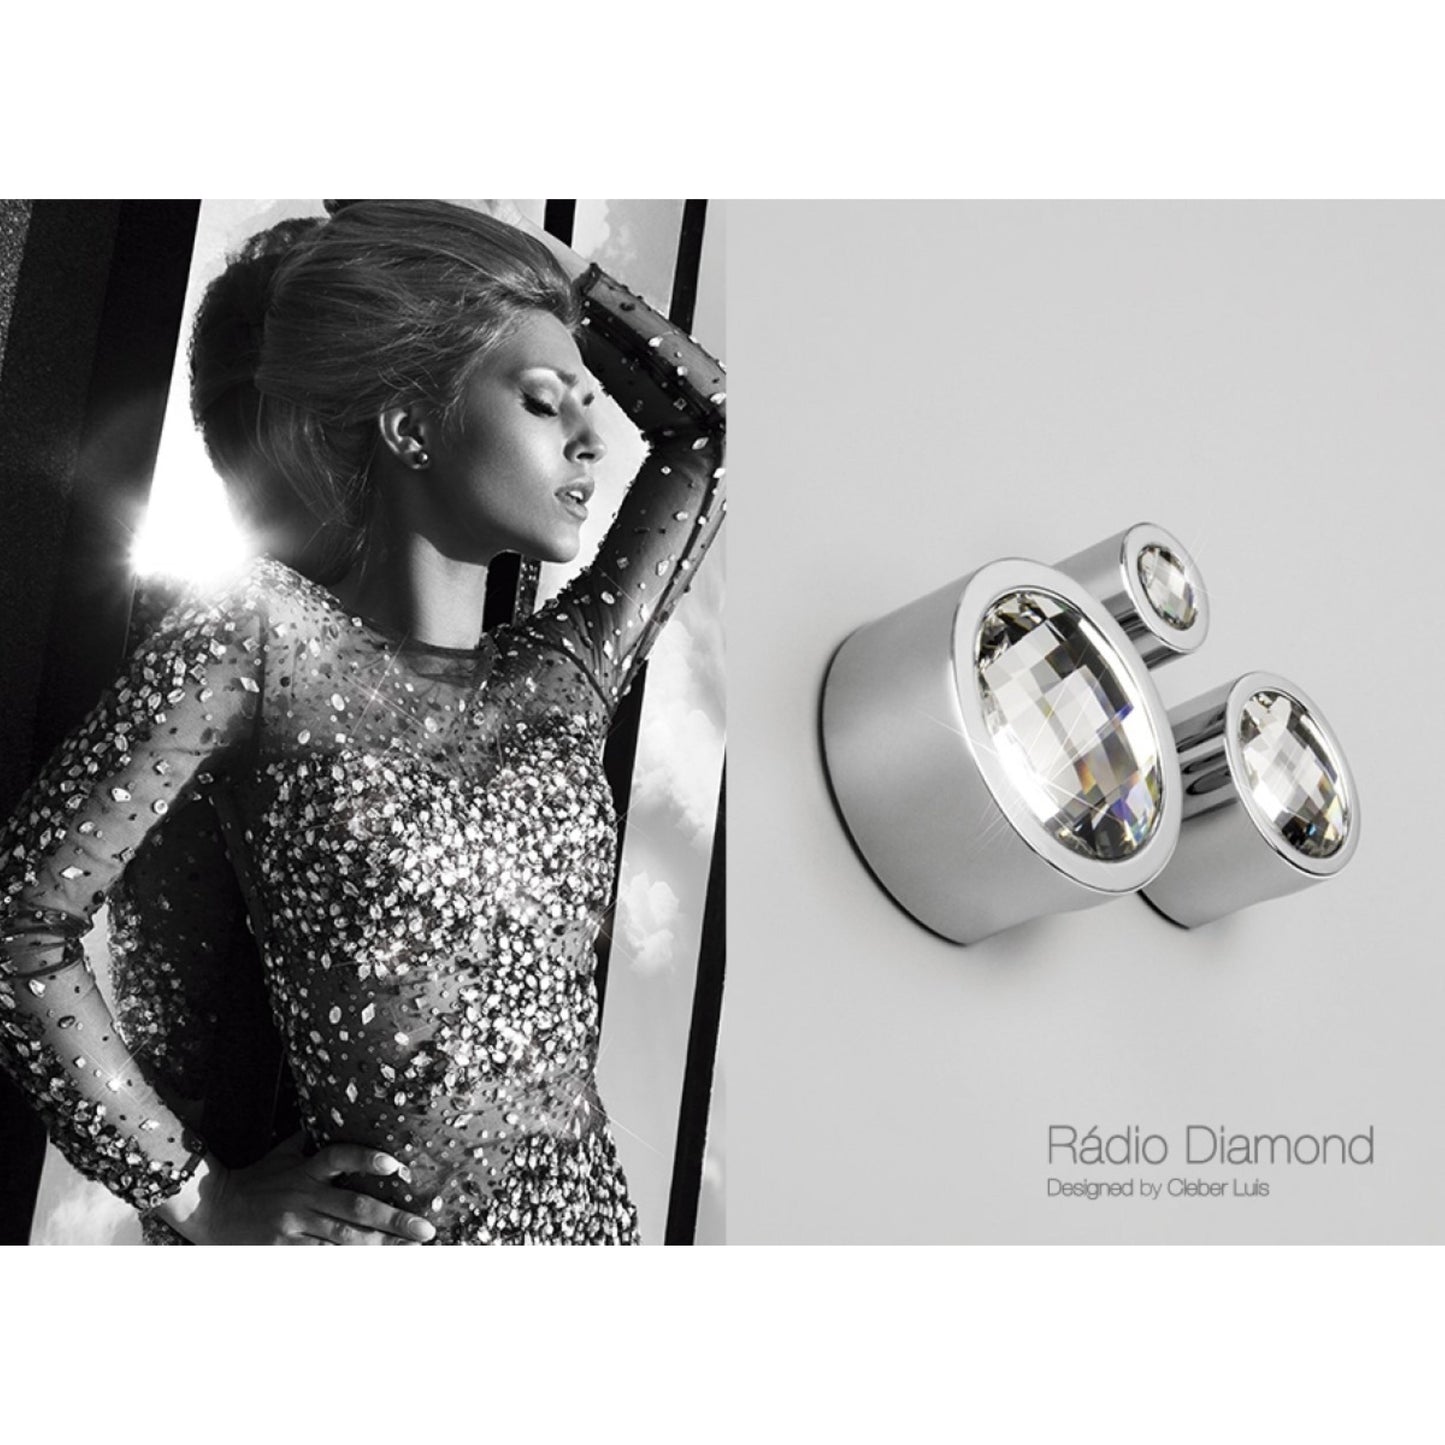 ZEN Design Radio 1" Diameter Chrome Diamond Cabinet Knob